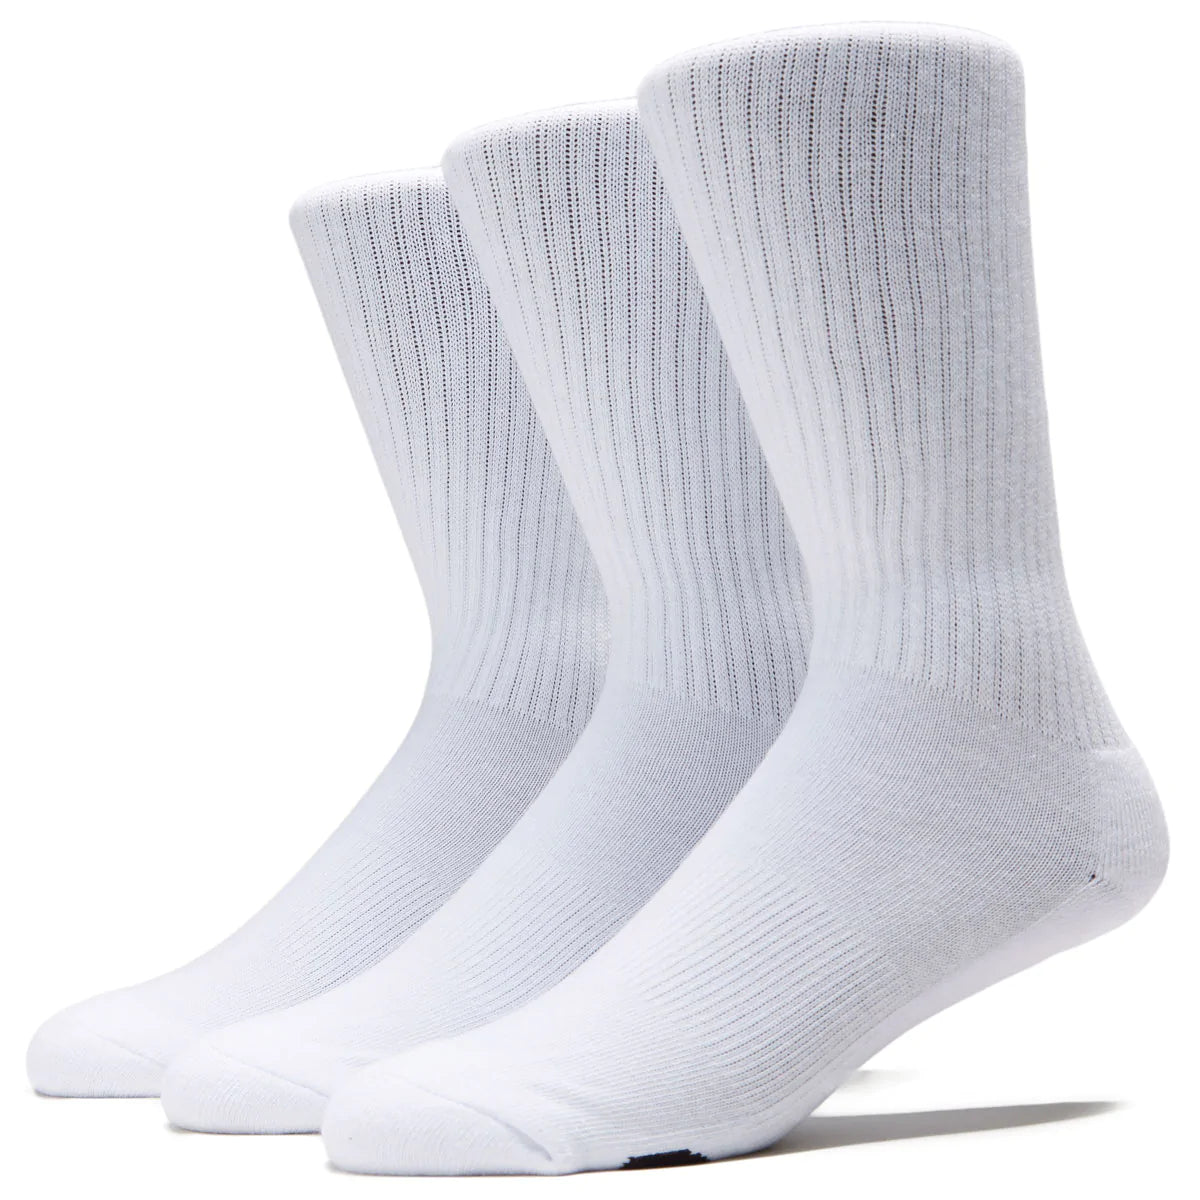 CCS Basis 3 Pack of Socks - White image 1